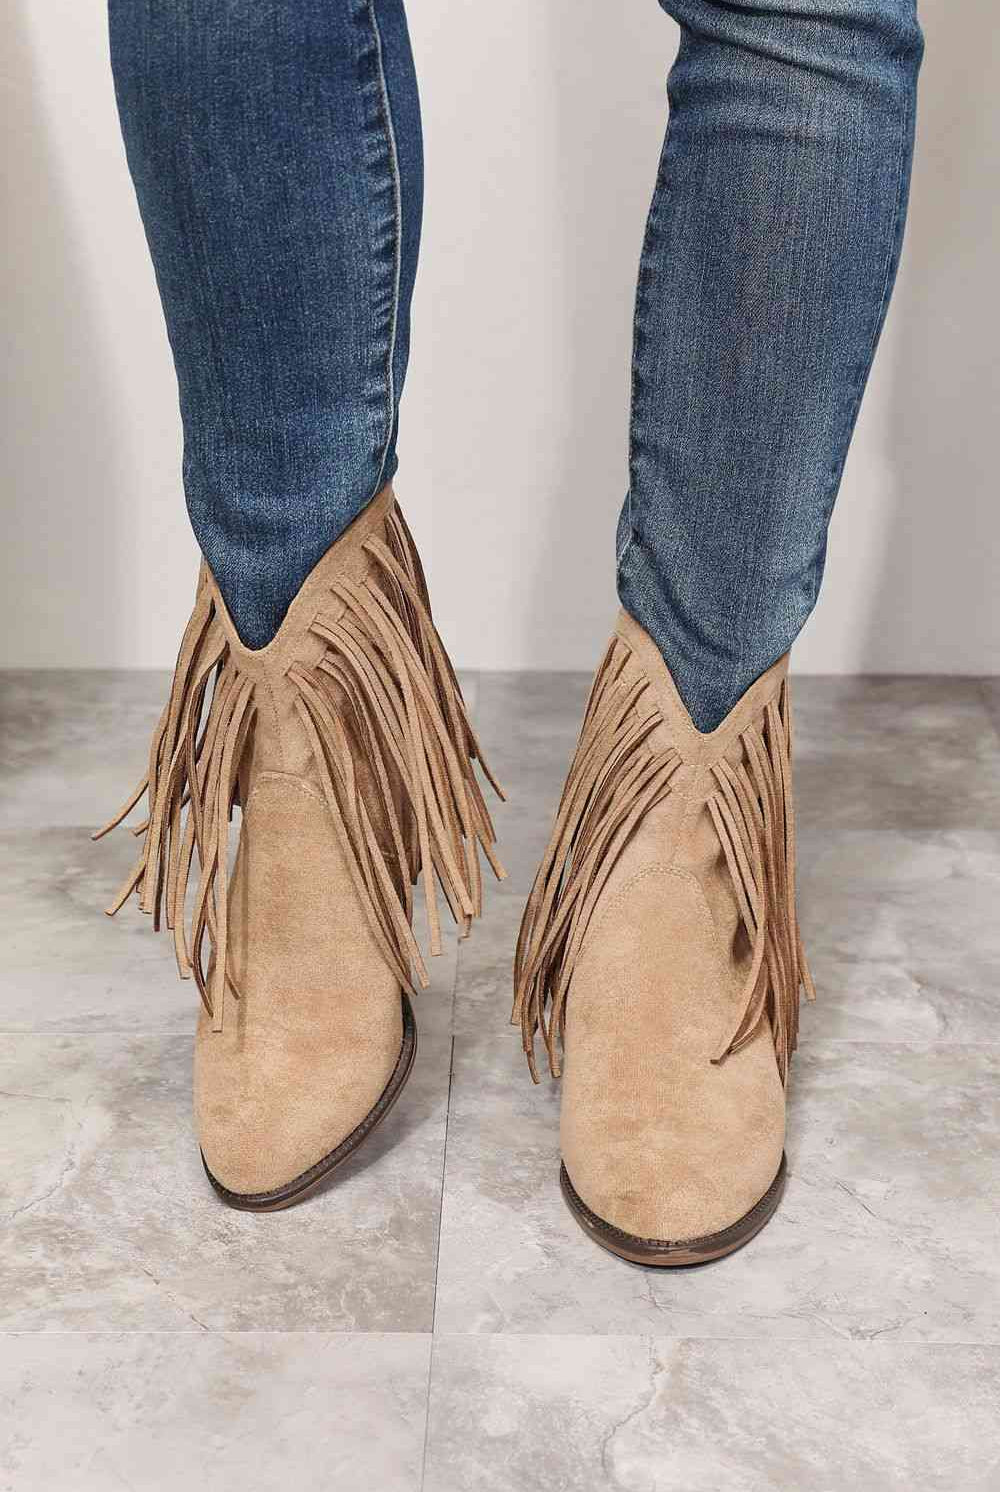 Gray Legend Women's Fringe Cowboy Western Ankle Boots Shoes